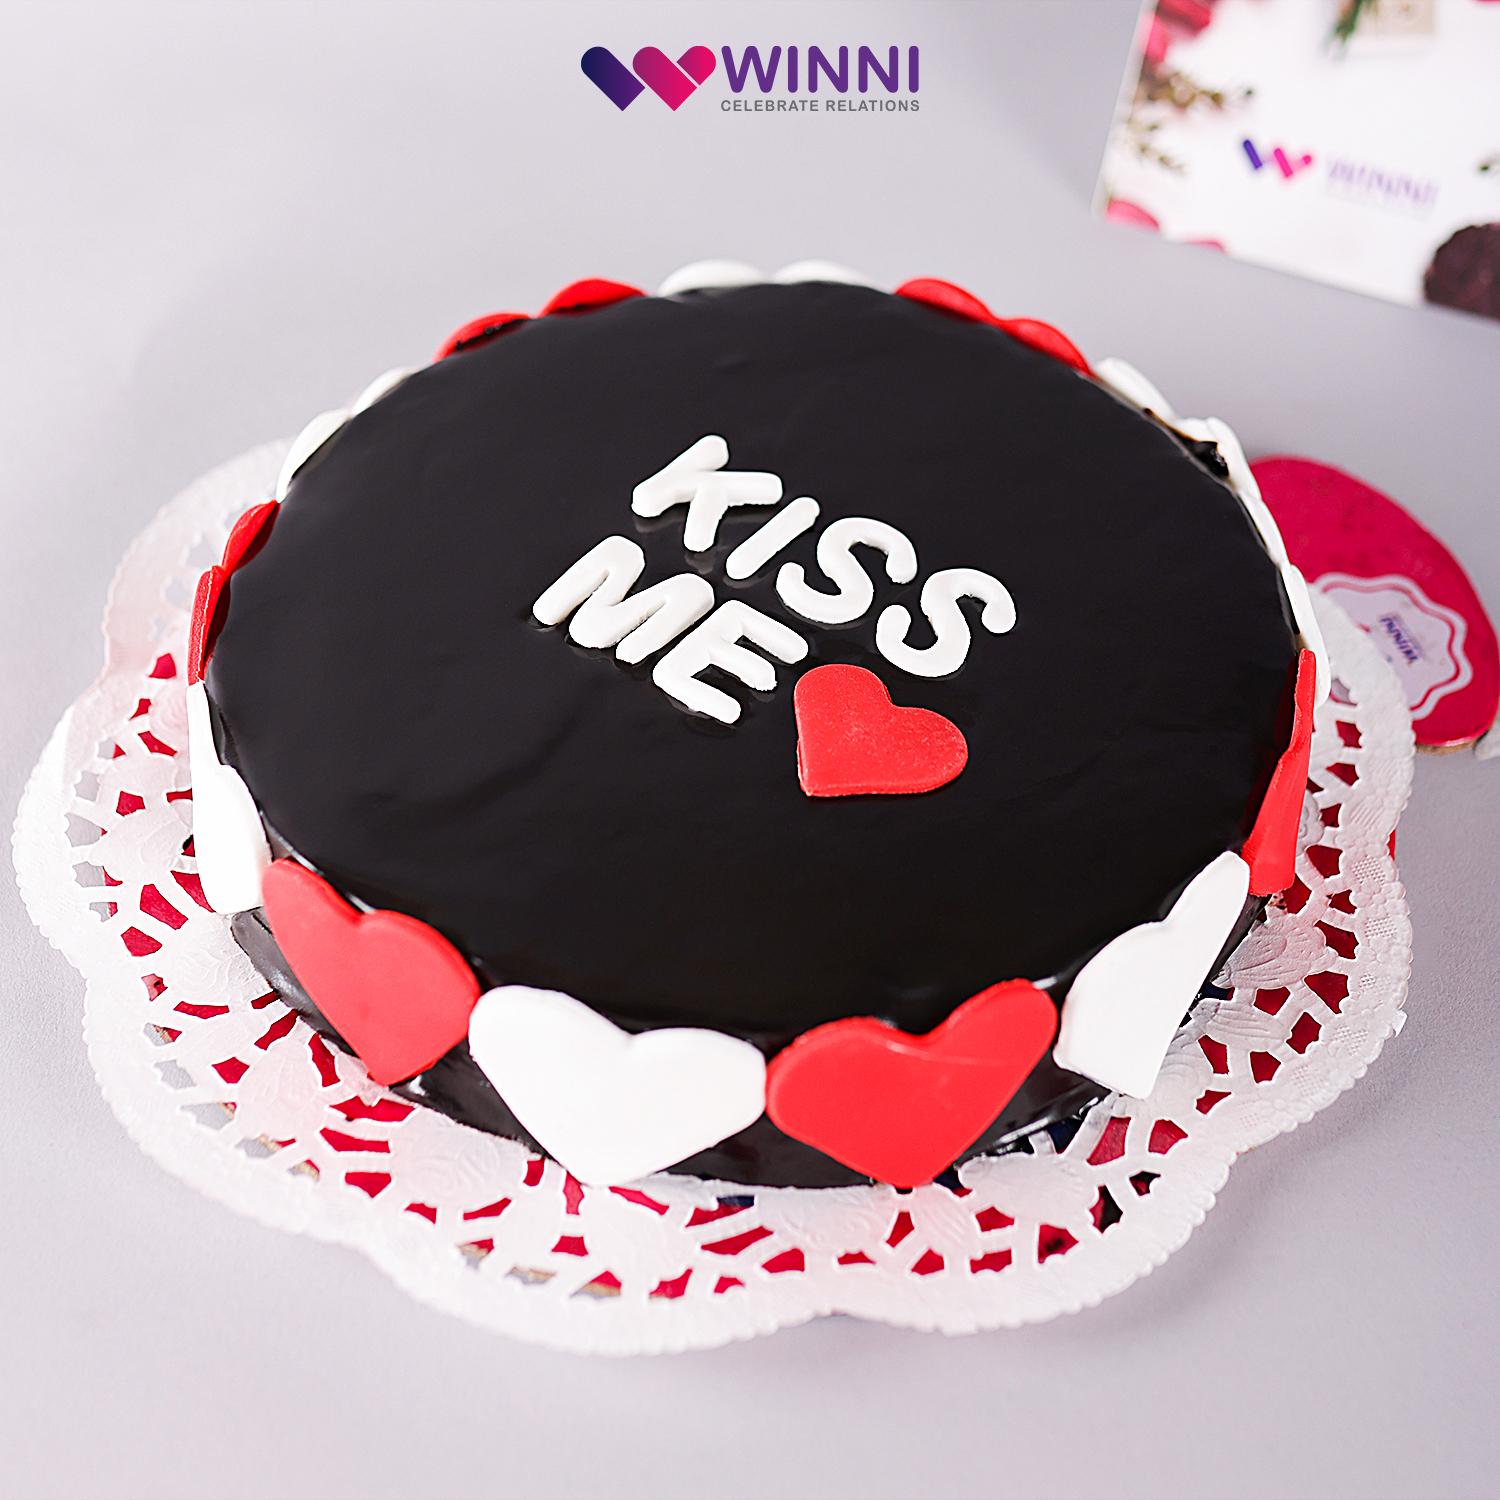 Cheeky card - Rude birthday cake - Kiss me Kwik – Comedy Card Company